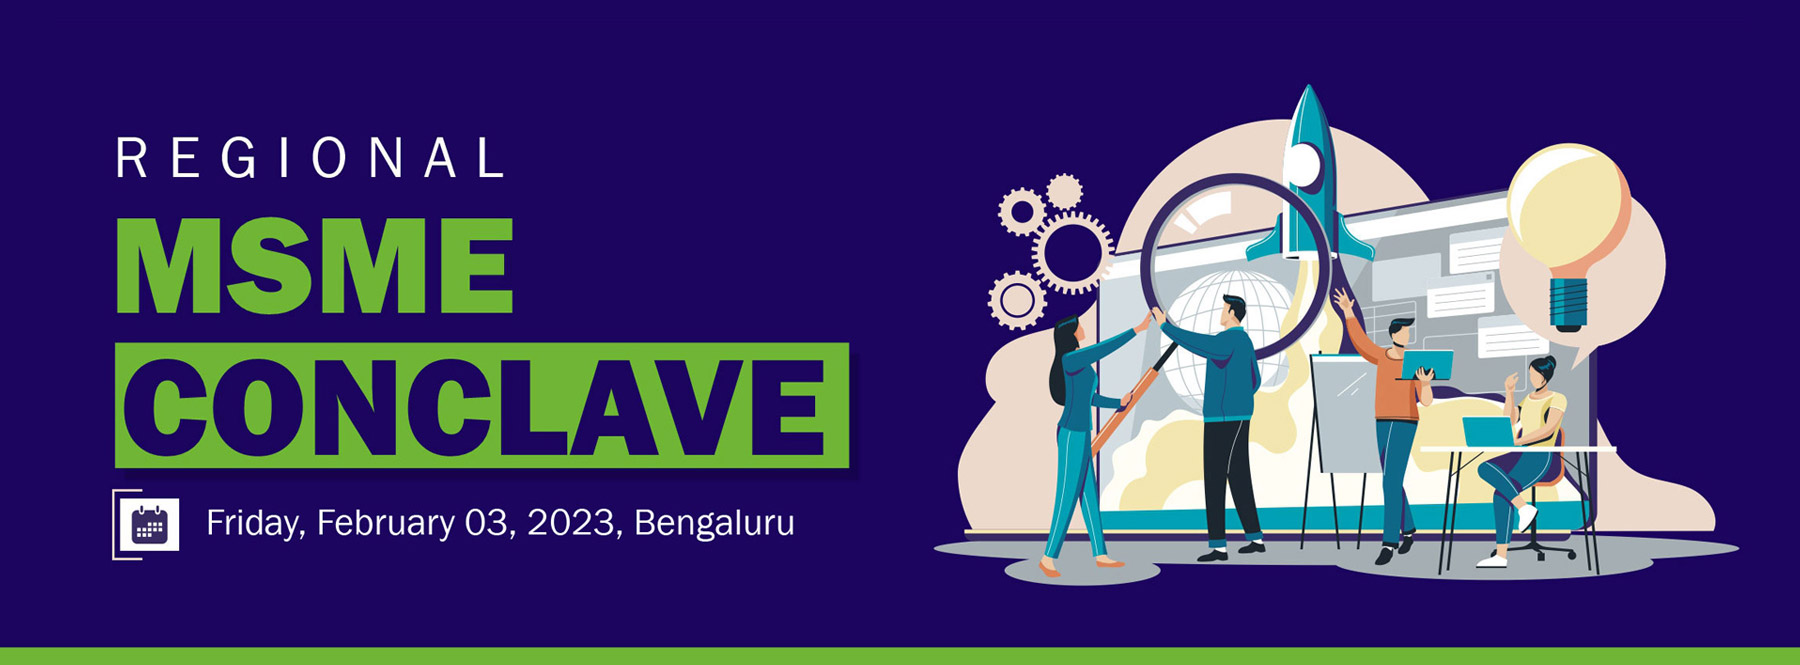 Regional MSME Conclave - IOD Bangalore